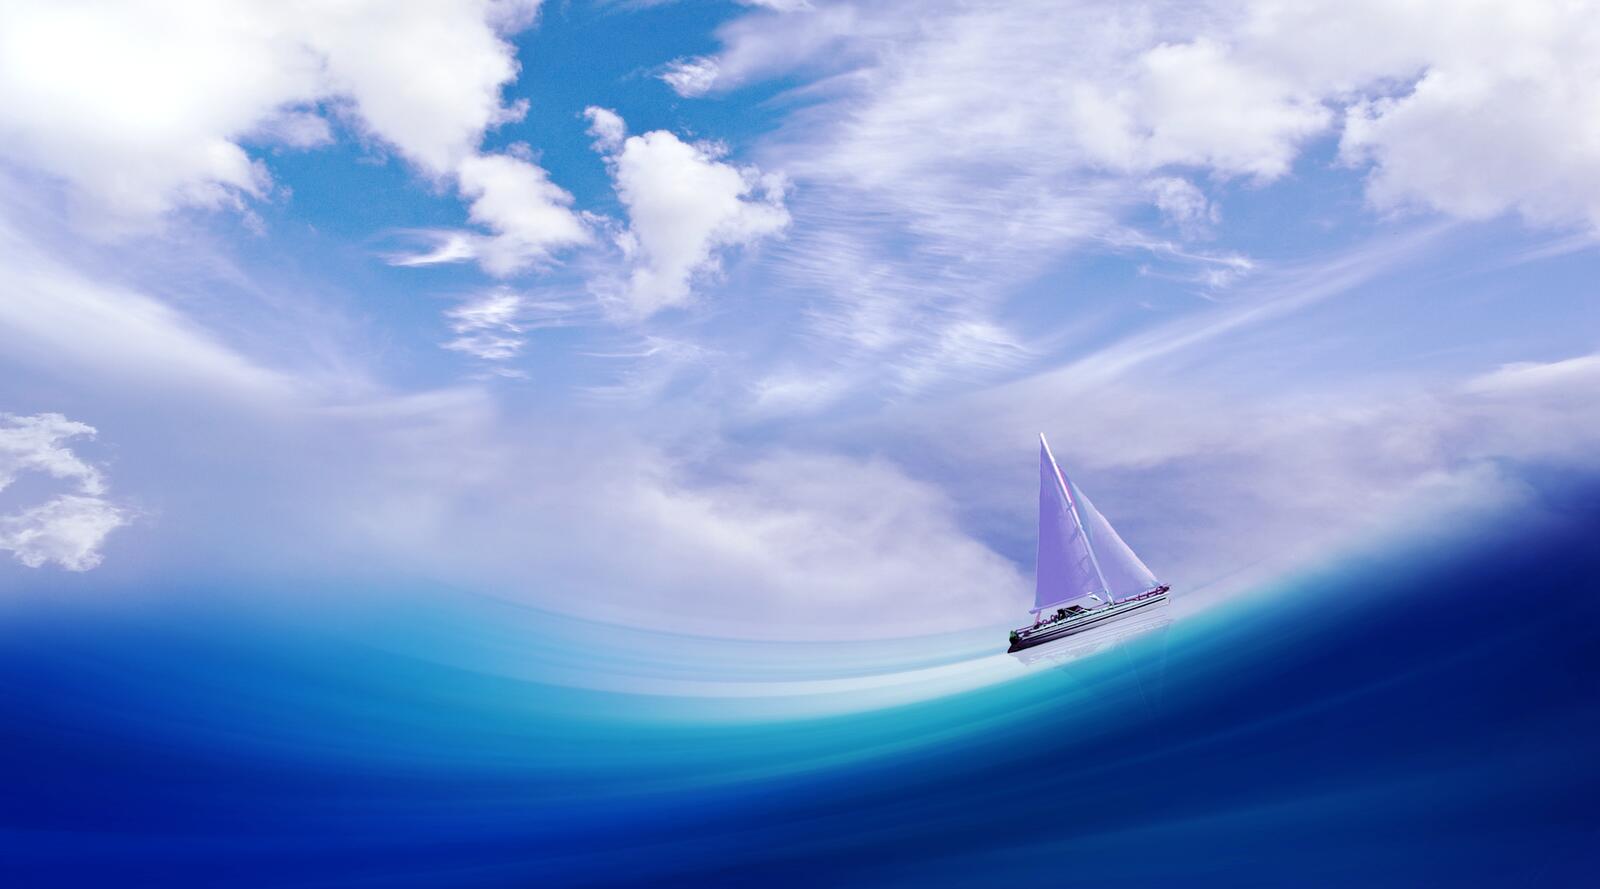 Free photo A sailboat sails the waves